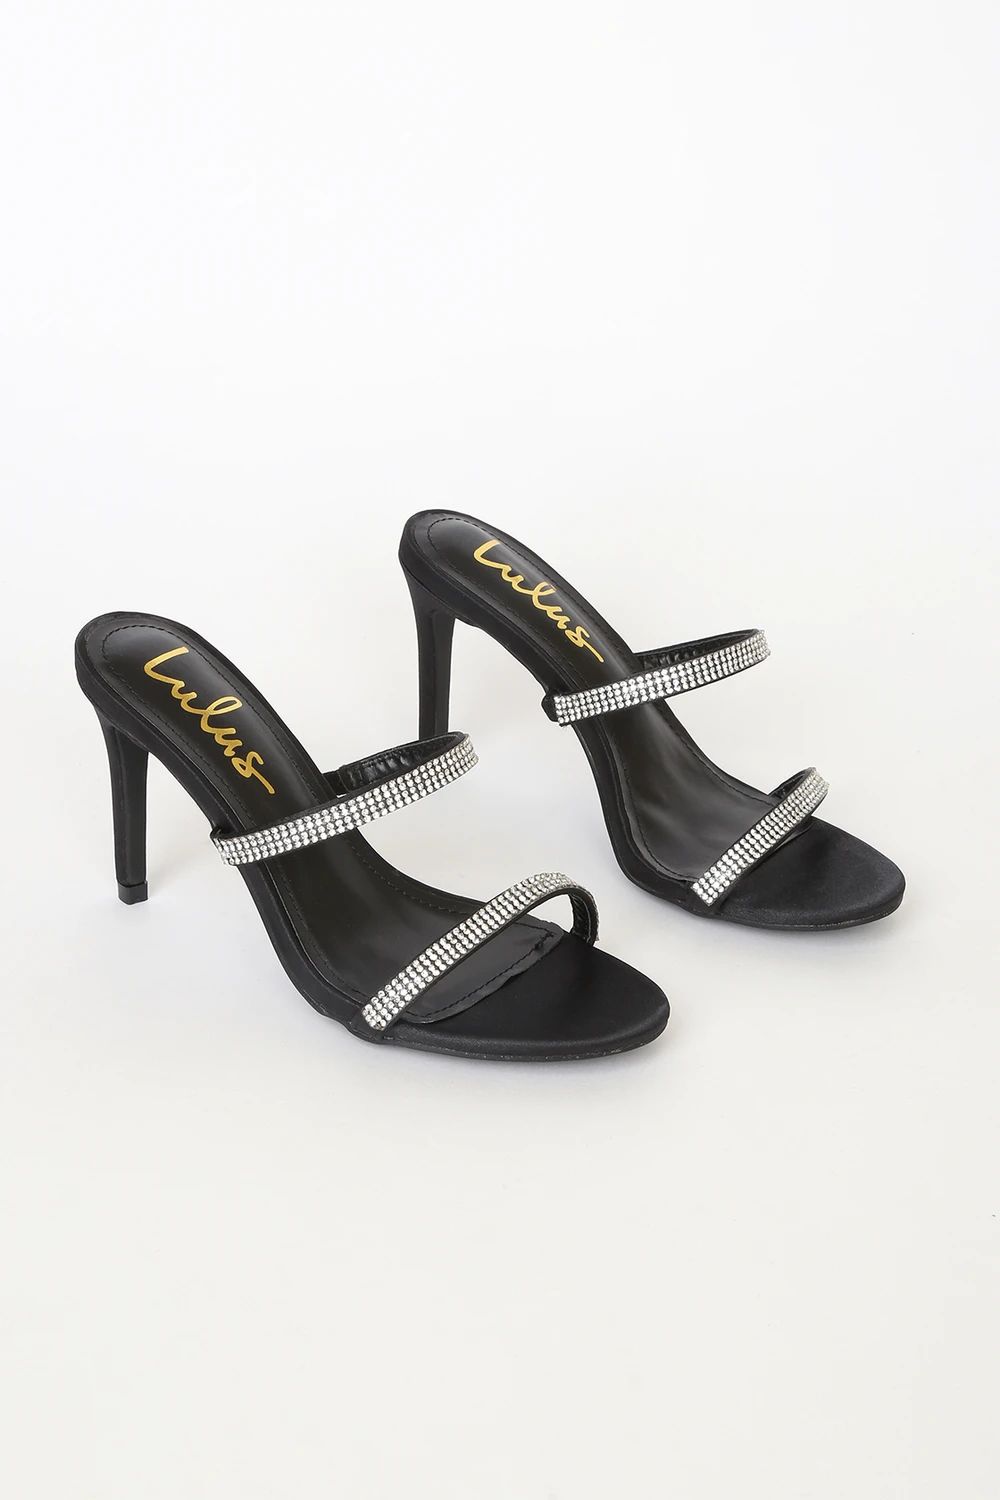 Ralphy Black Satin Rhinestone High Heel Sandals | Lulus (US)